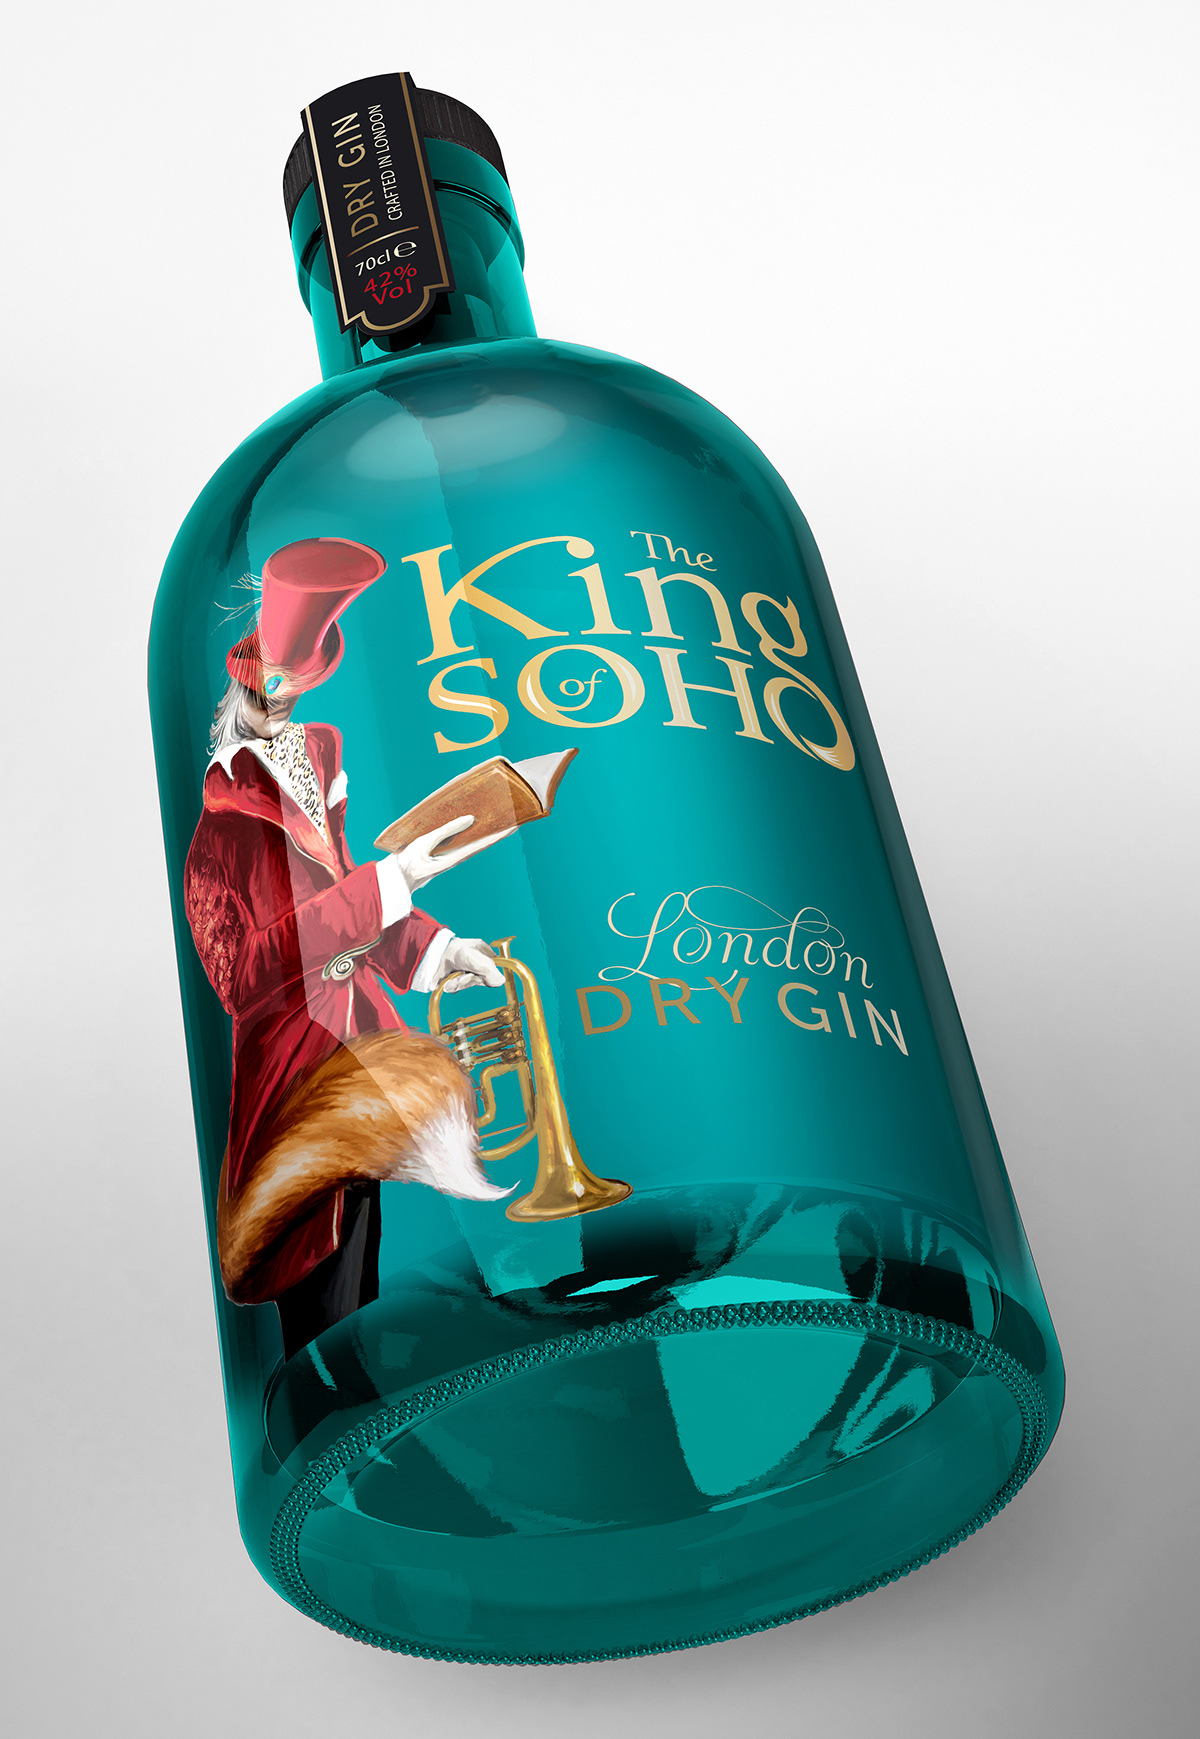 London Gin King of Soho